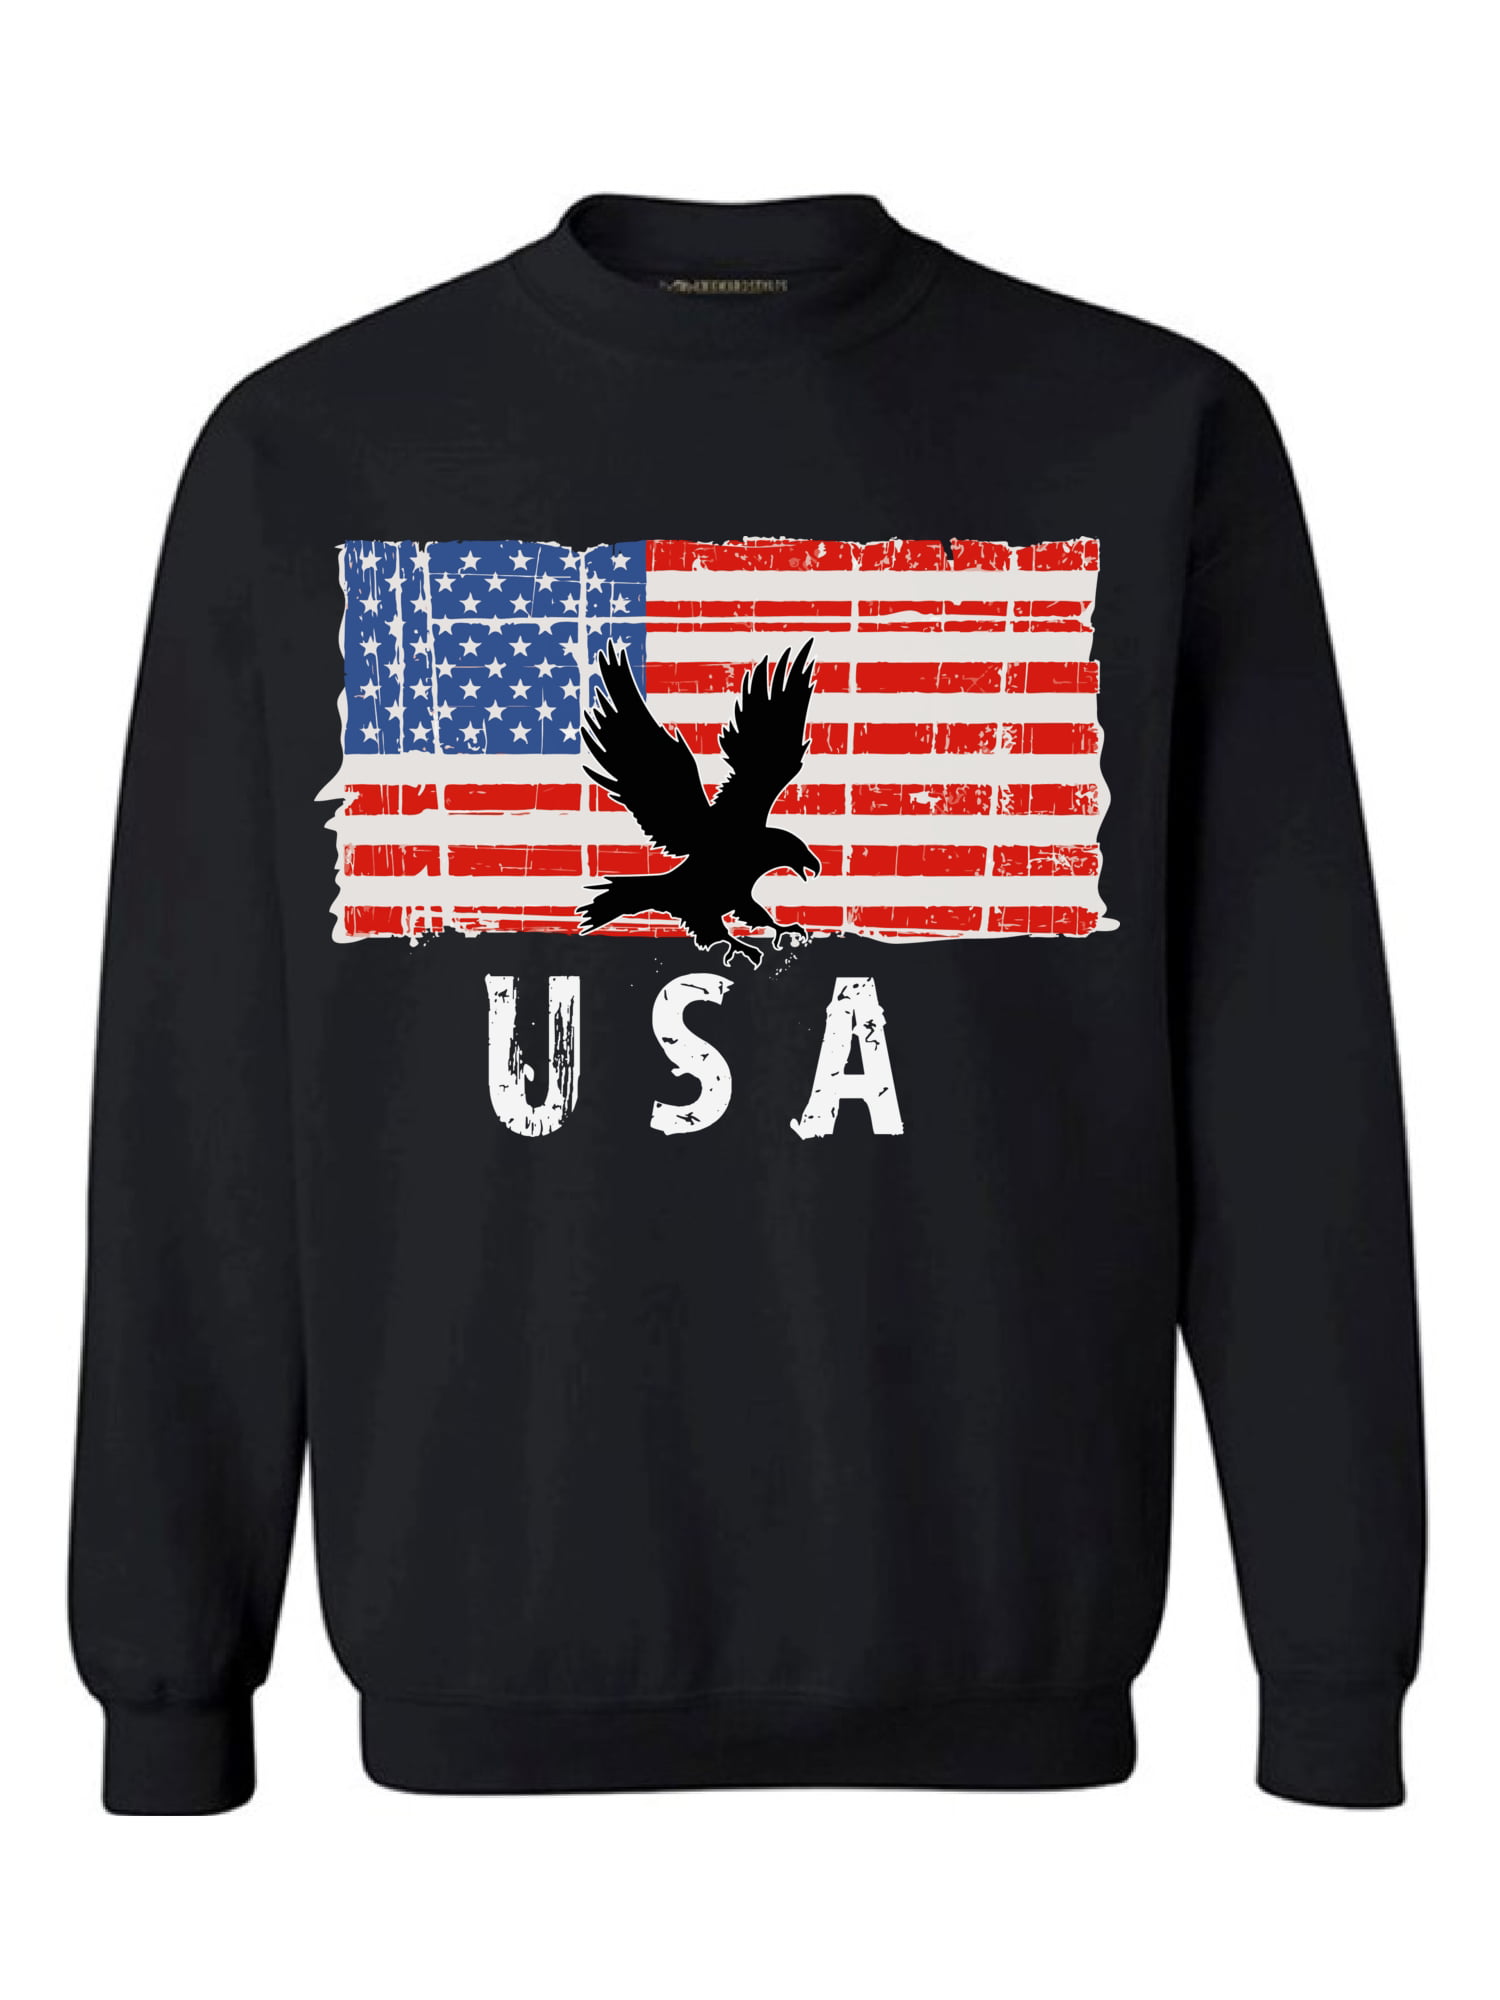 USA Flag Hooded Sweatshirt for Men Women. Eagle USA Men Women Hoodie 4th of July Party